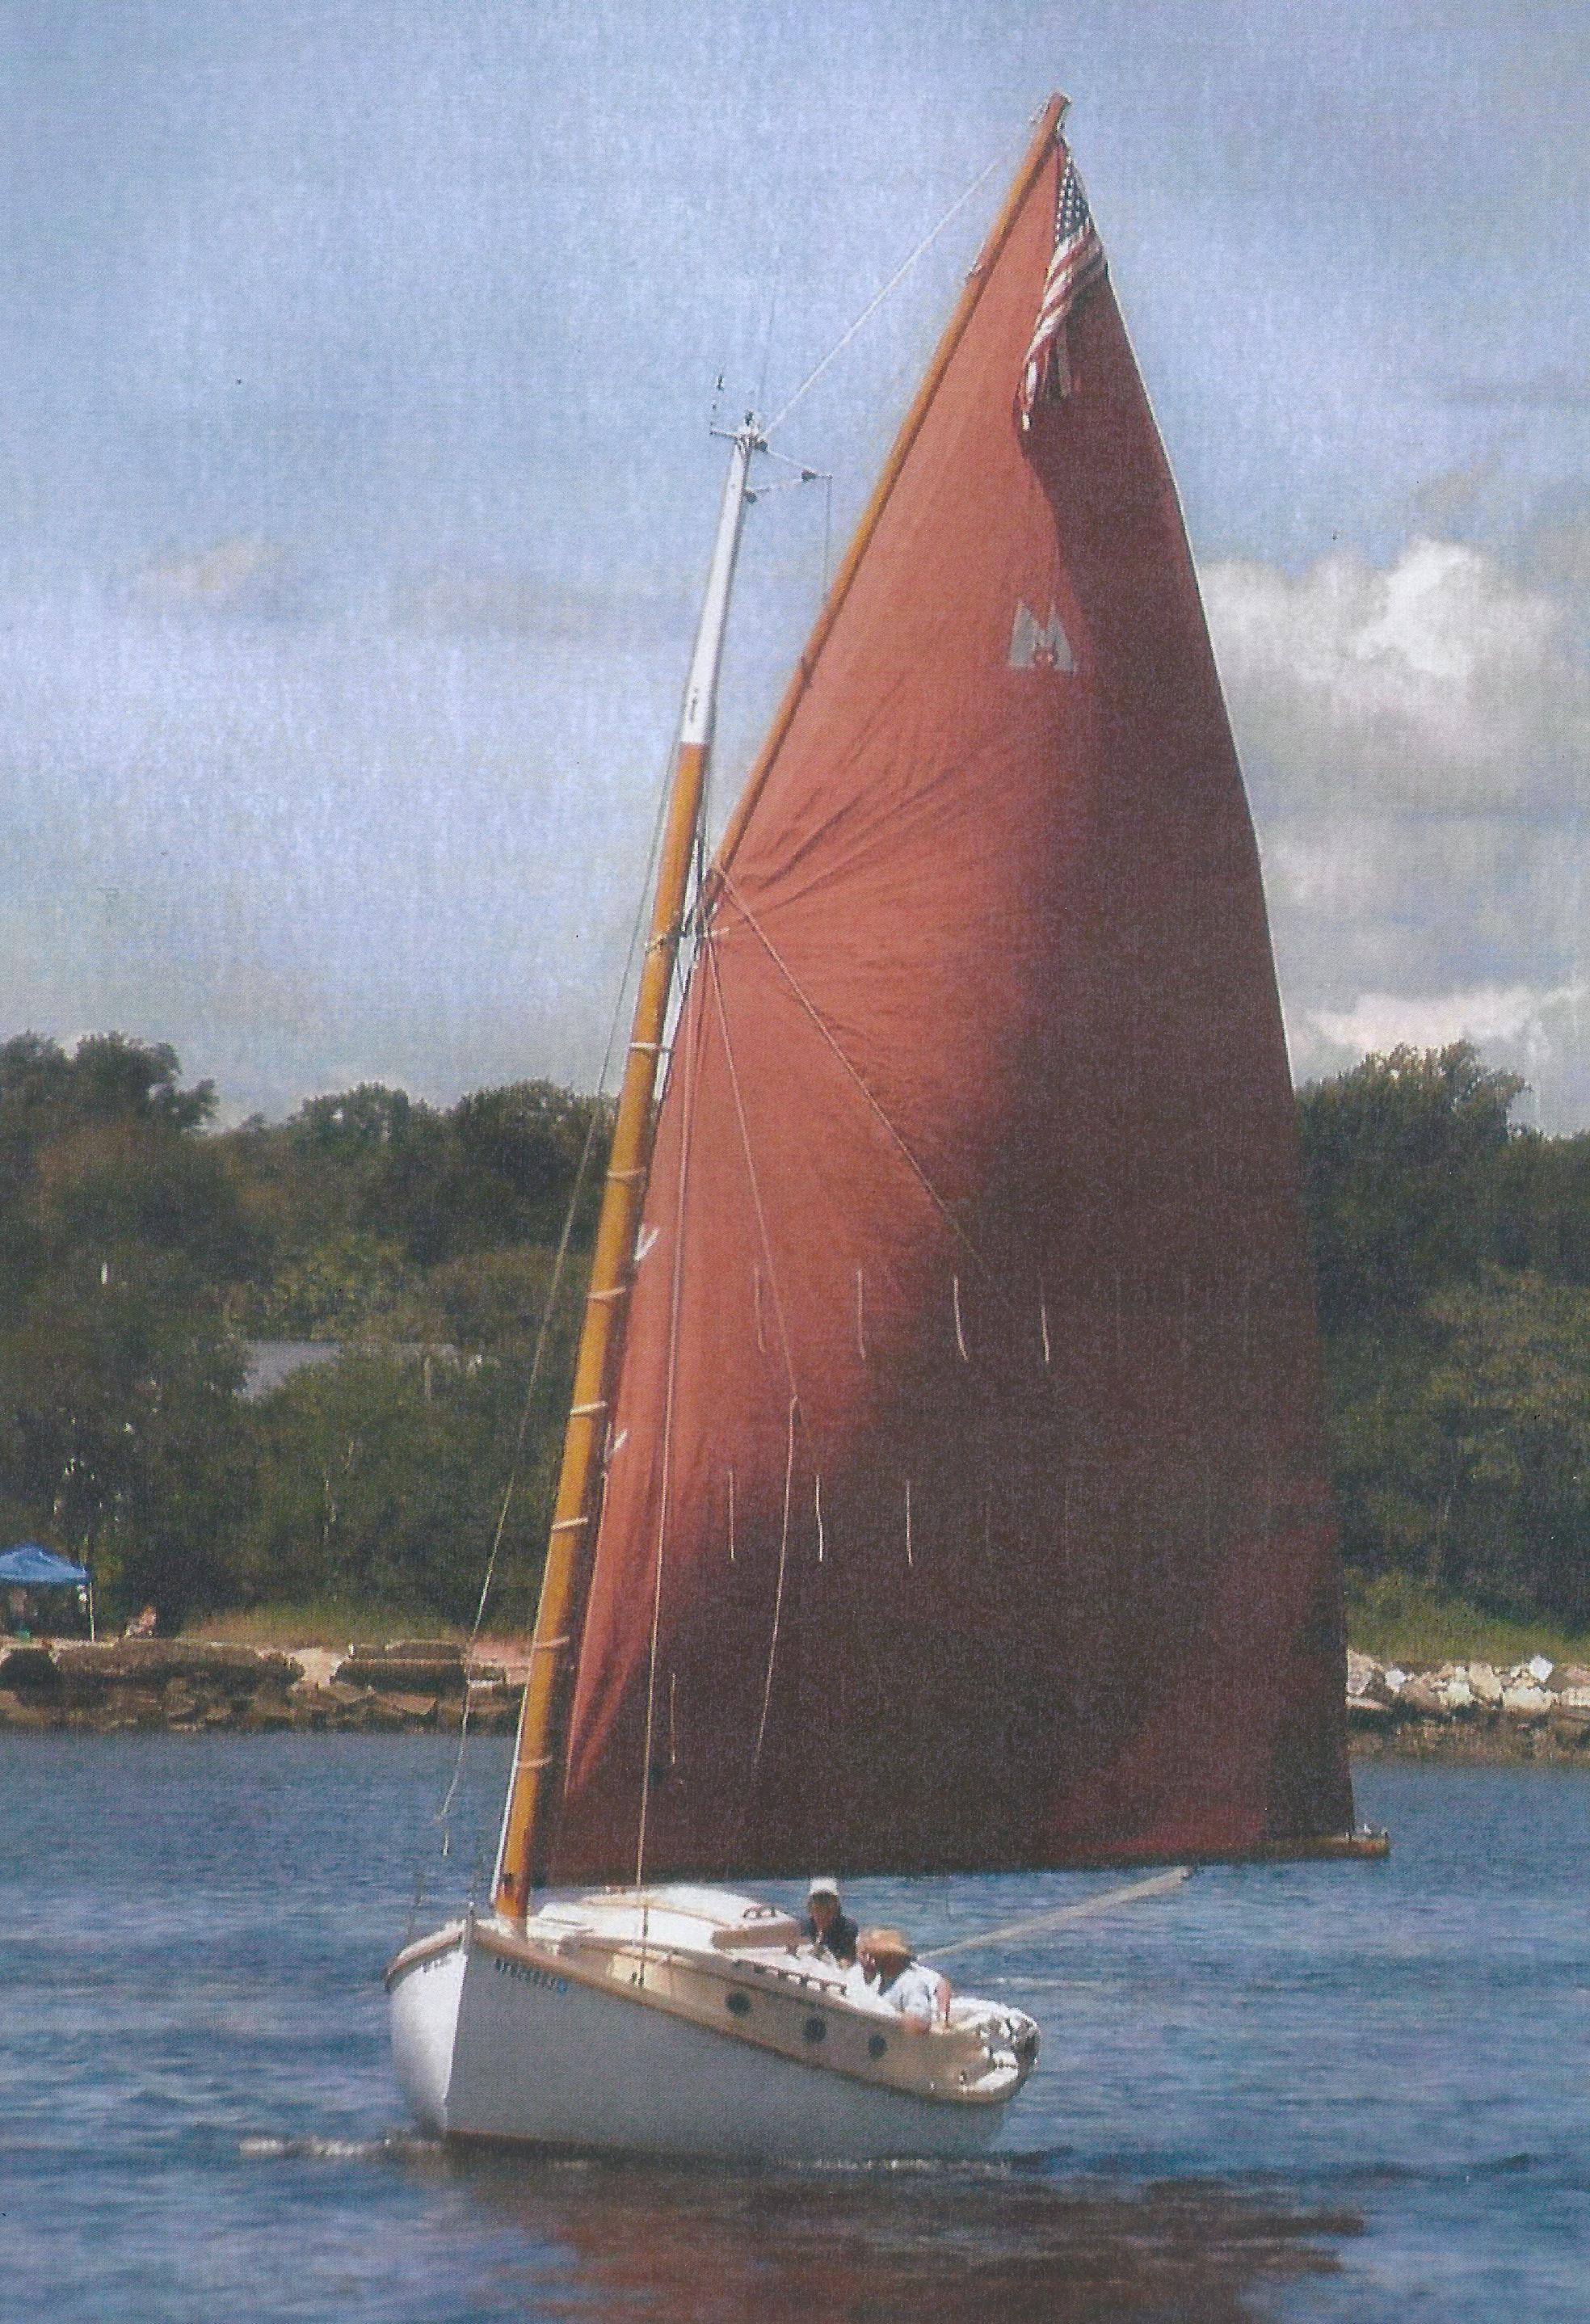 1992 Menger 23 Catboat, Staten Island New York - boats.com